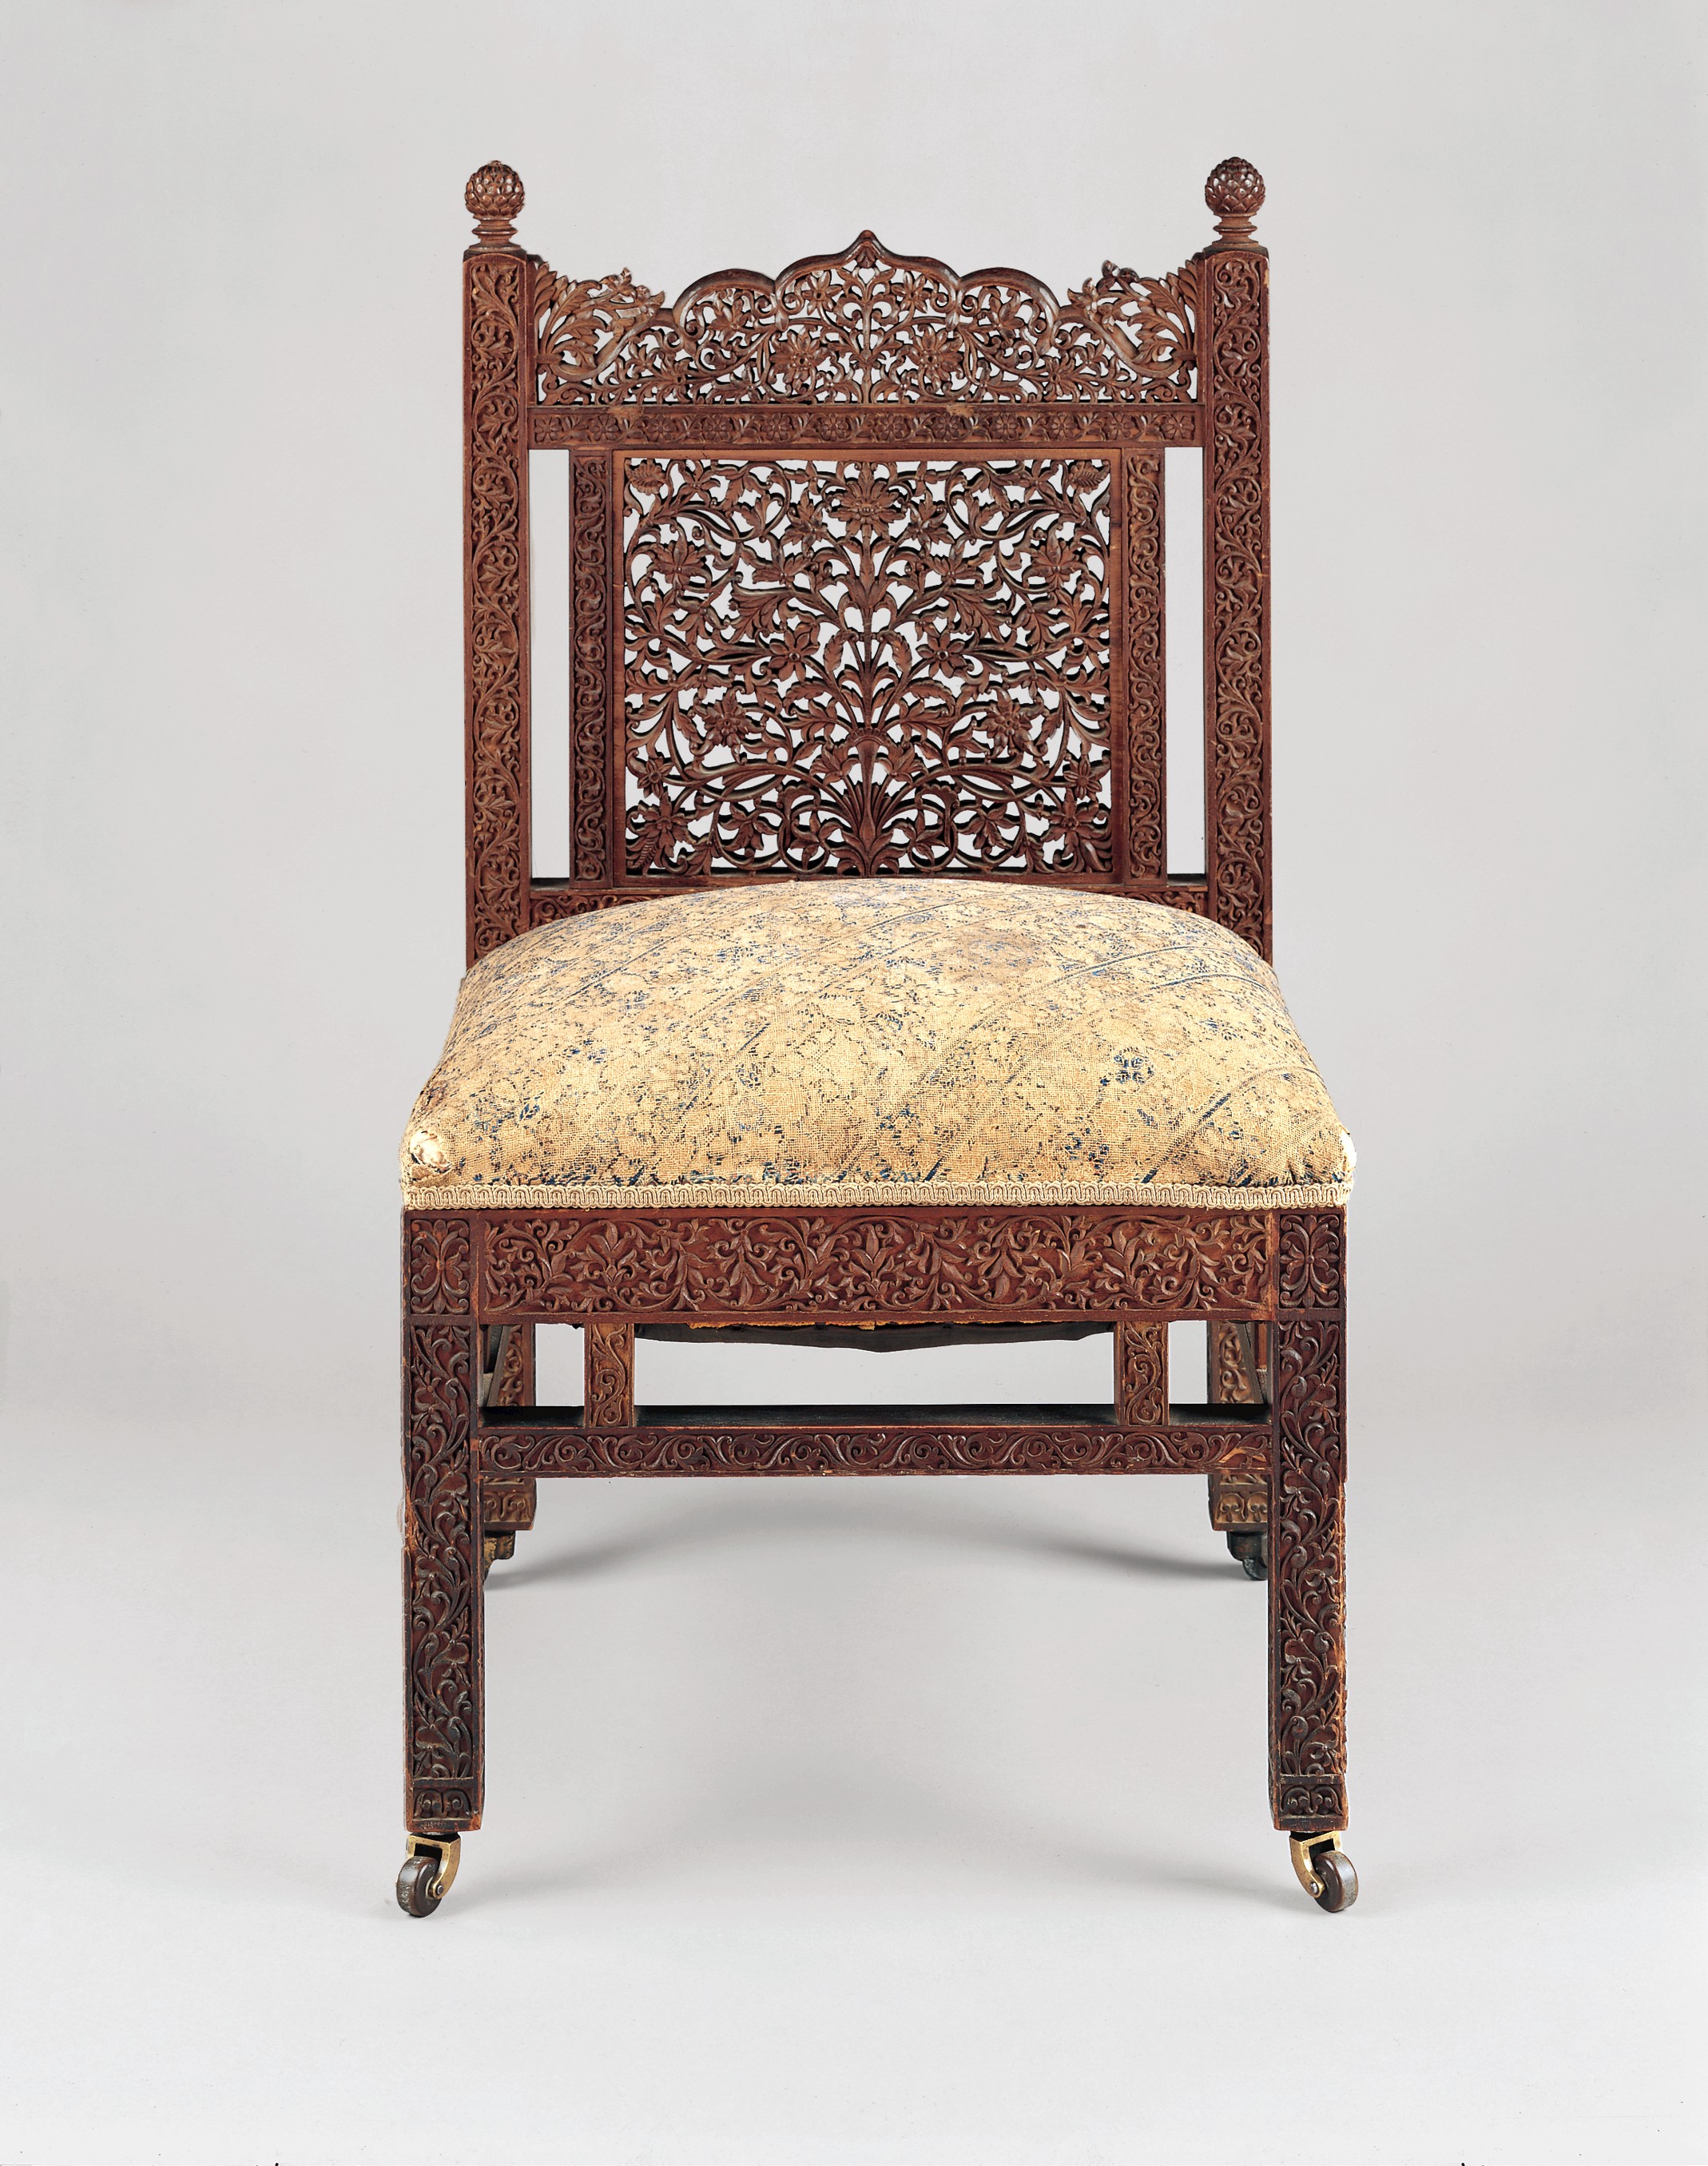 Chair by Lockwood de Forest - c. 1881-6 - 82.2 x 46.4 x 47 cm Metropolitan Museum of Art